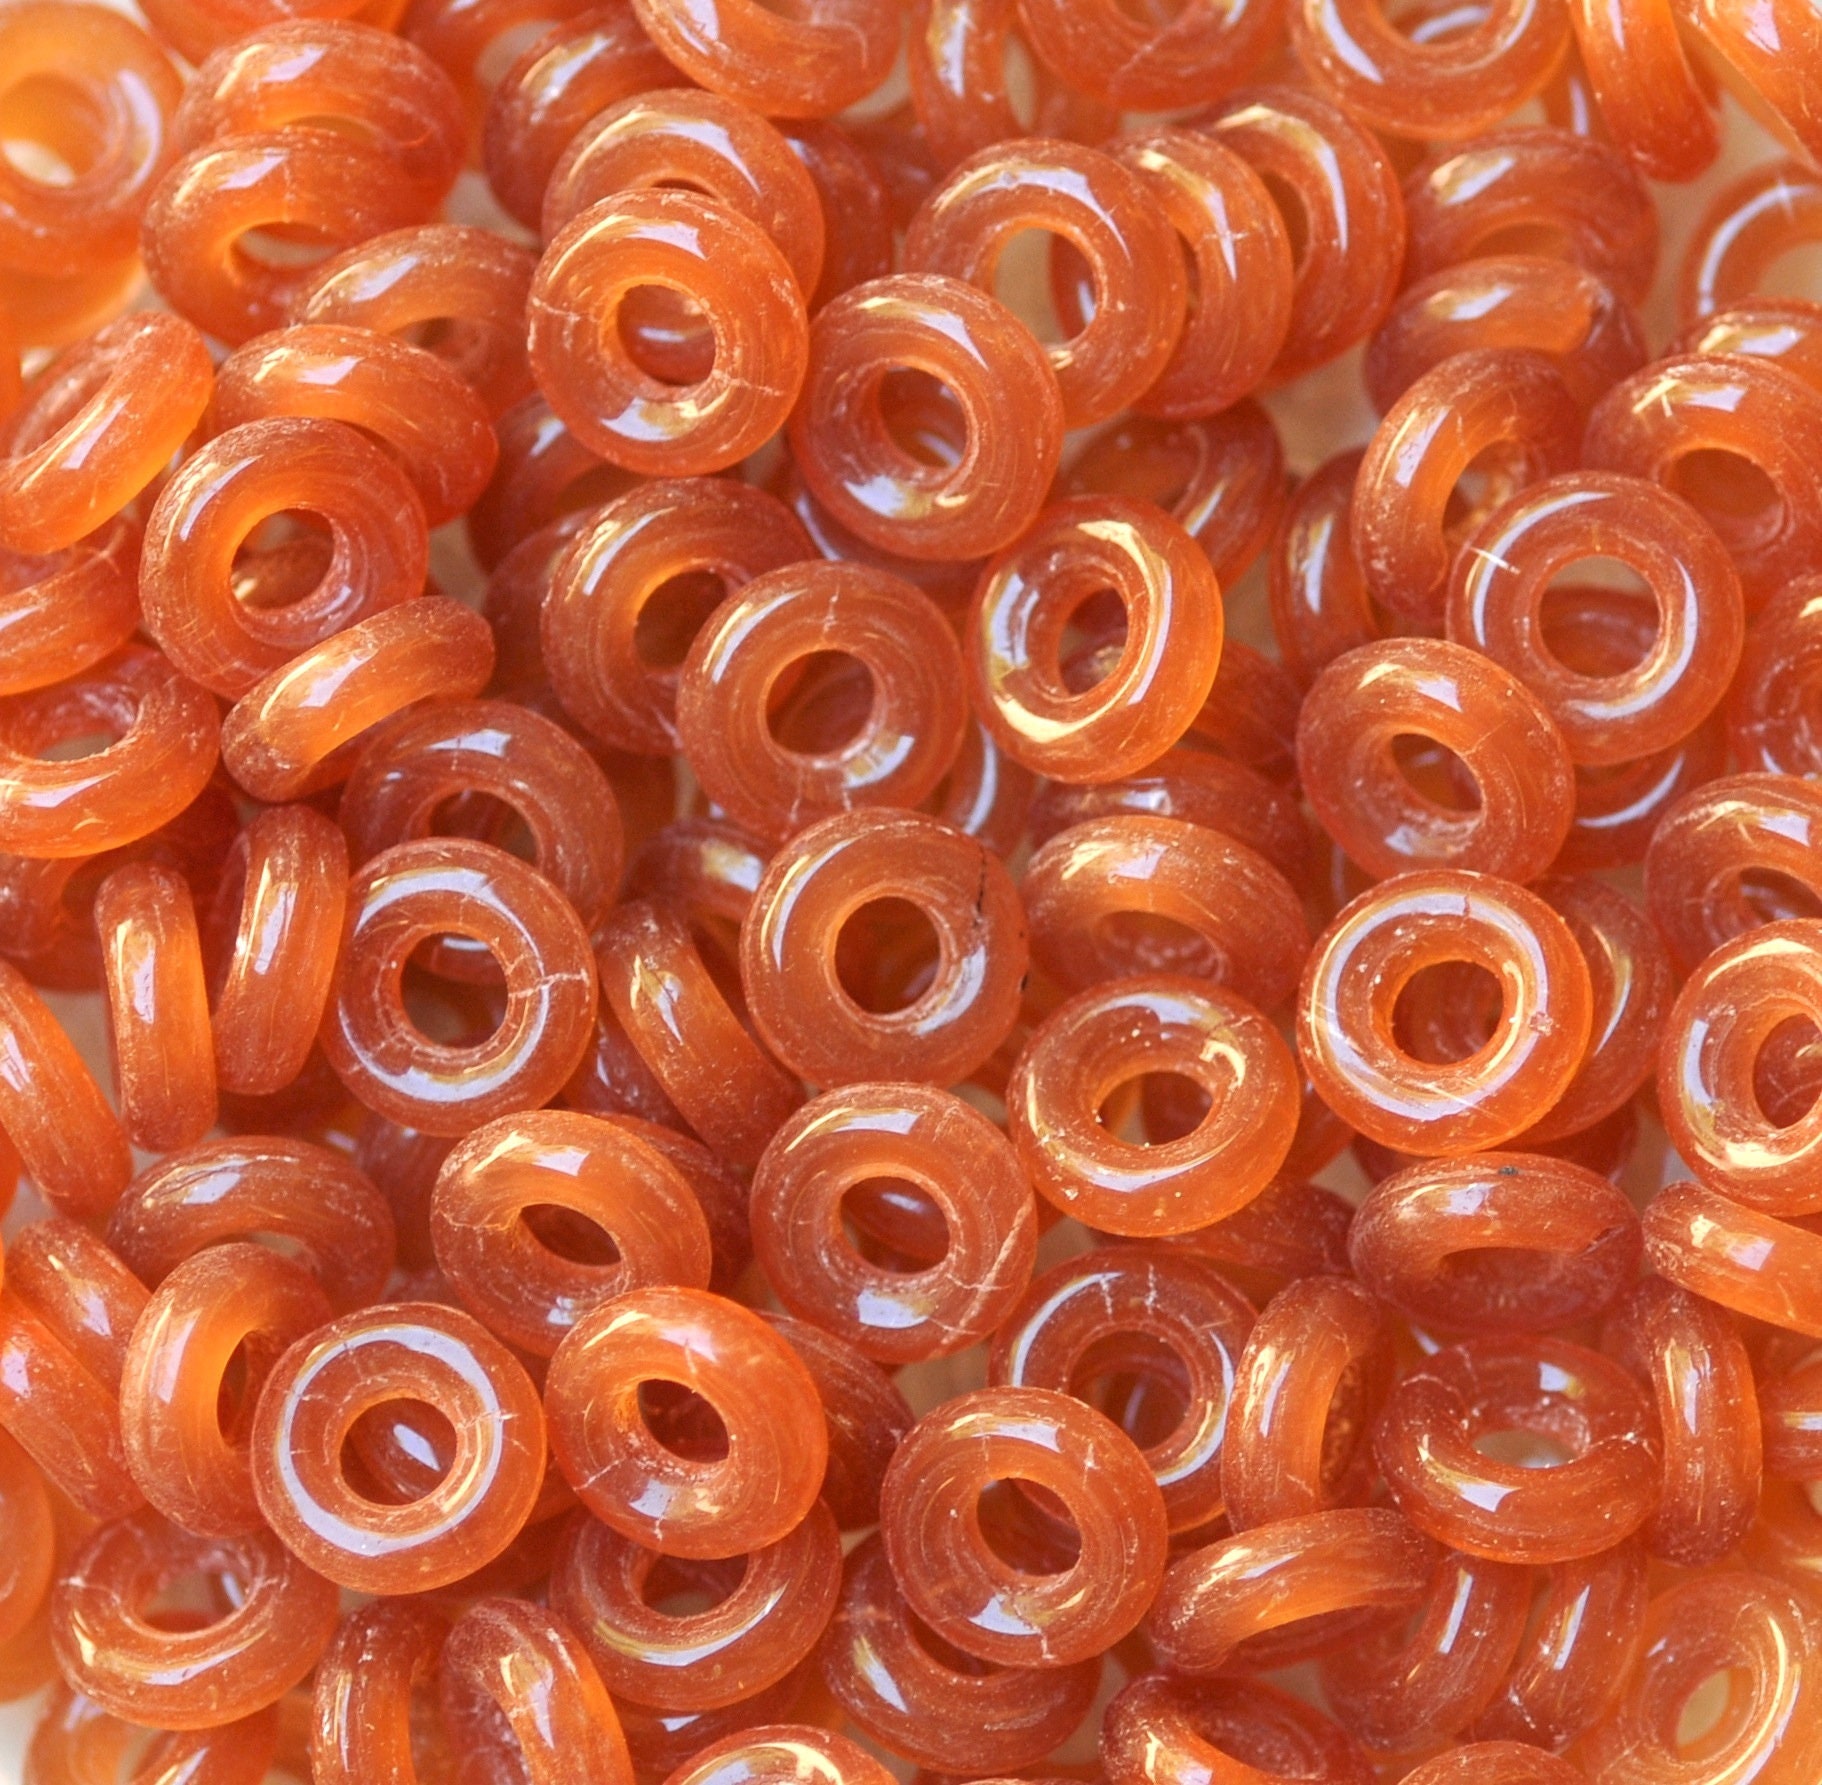 90 Pcs 9 mm Donut Shaped Plastic Beads Mix Lot